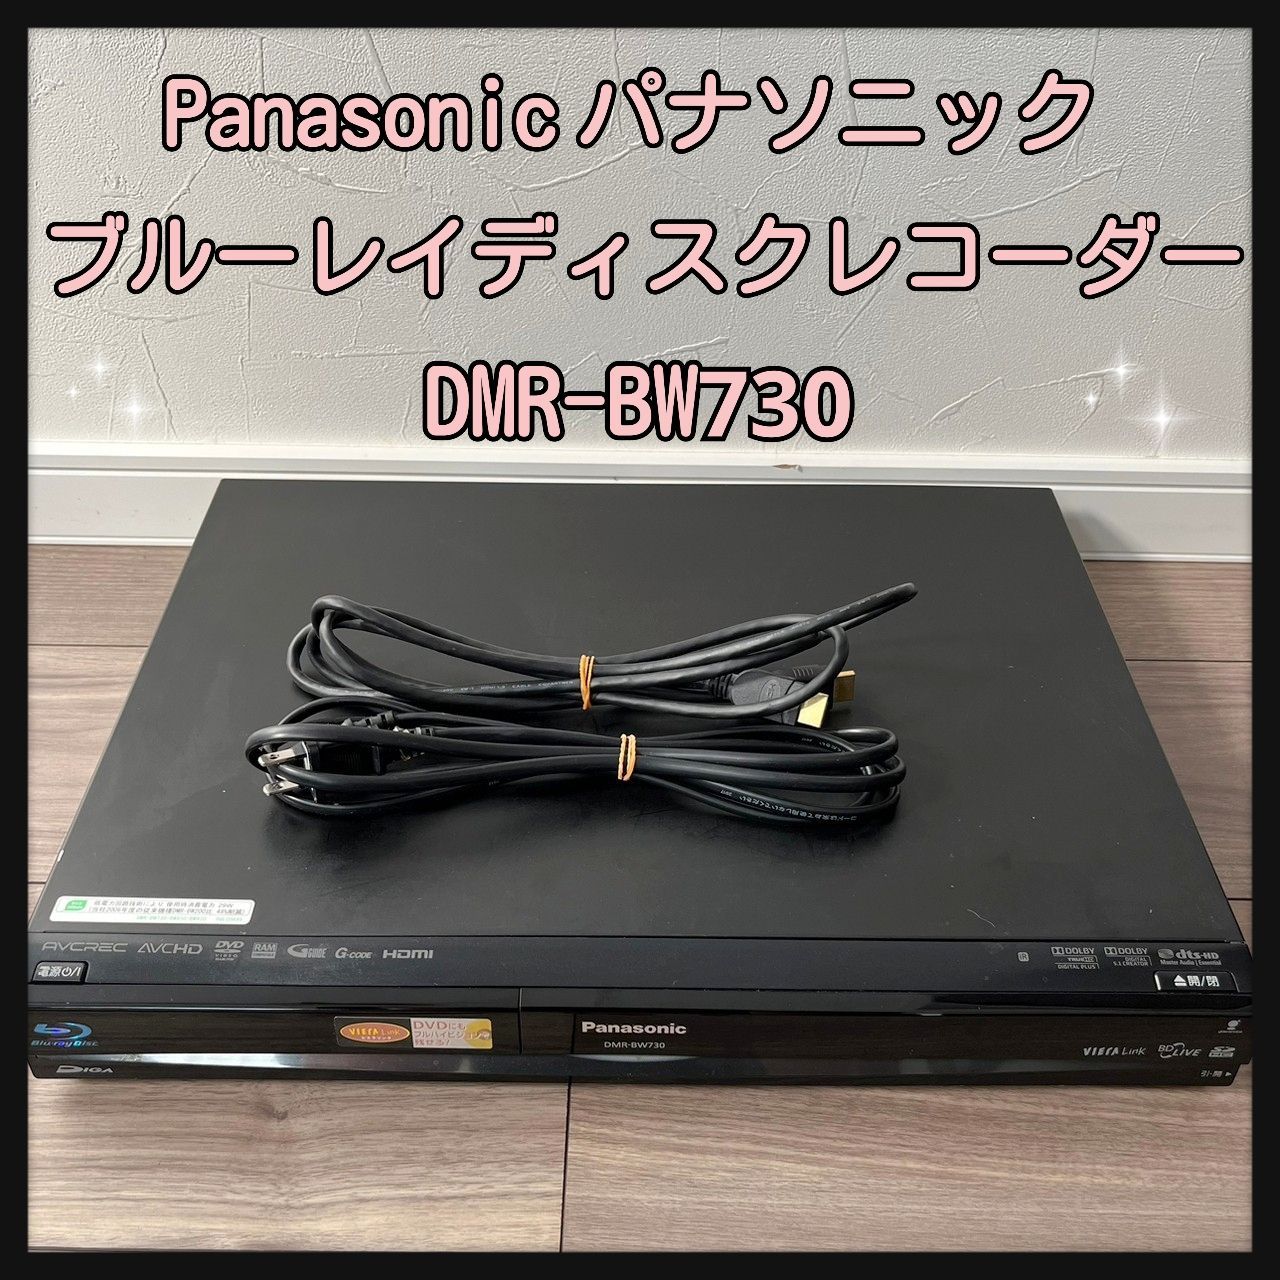 Panasonic パナソニック ブルーレイディスクレコーダー DMR-BW730 ...